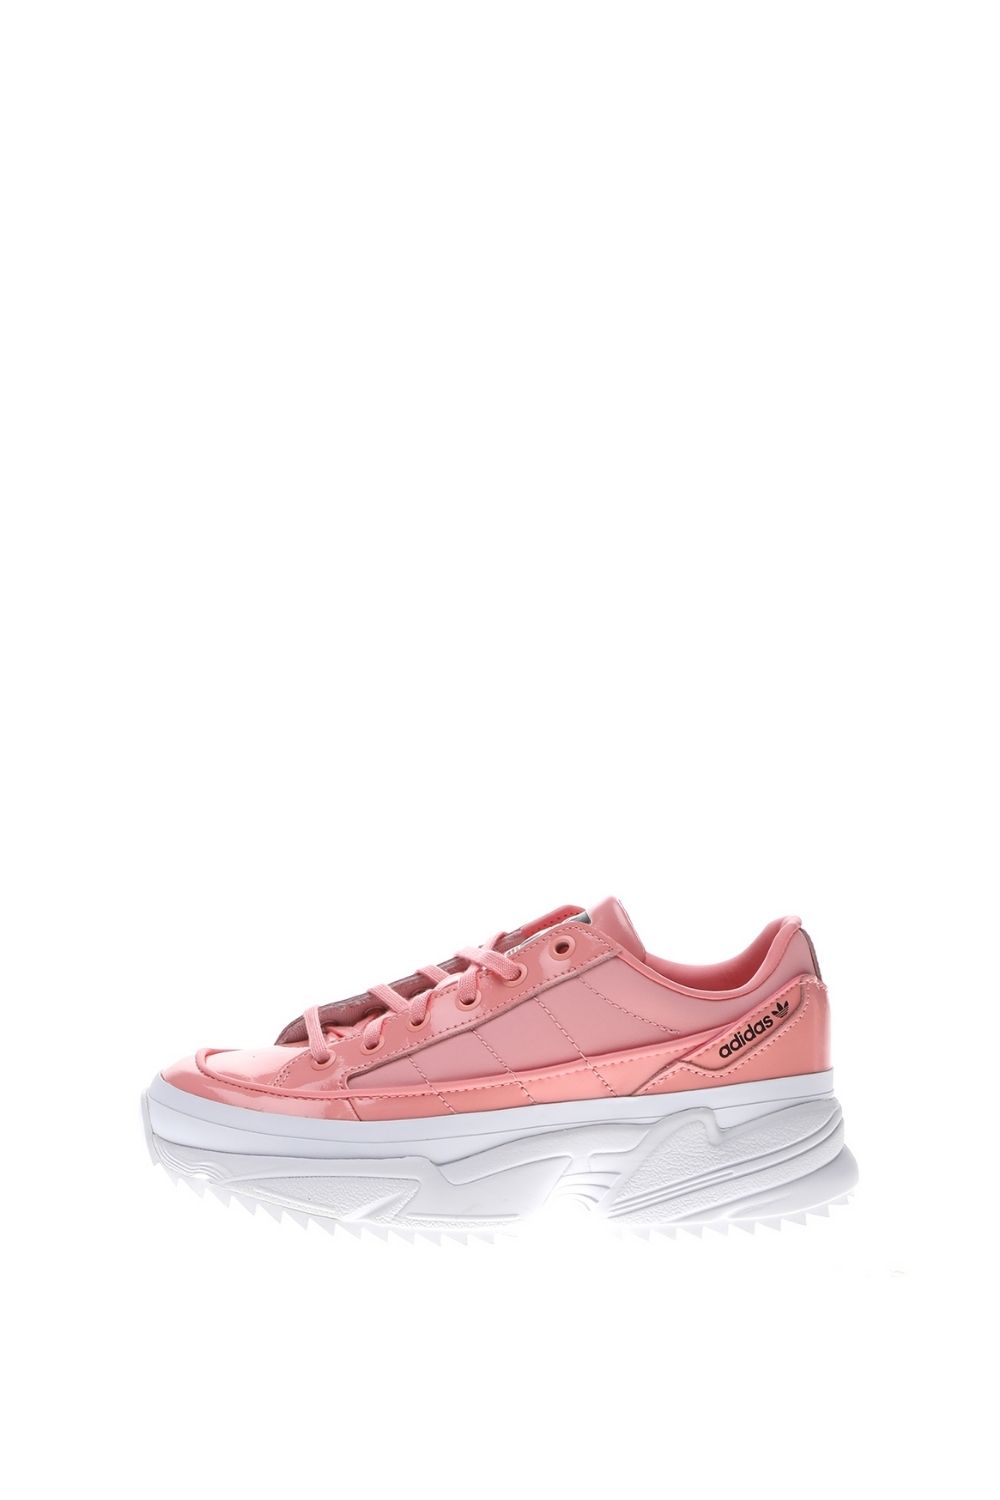 adidas Originals – Γυναικεία παπούτσια adidas Originals KIELLOR W ροζ